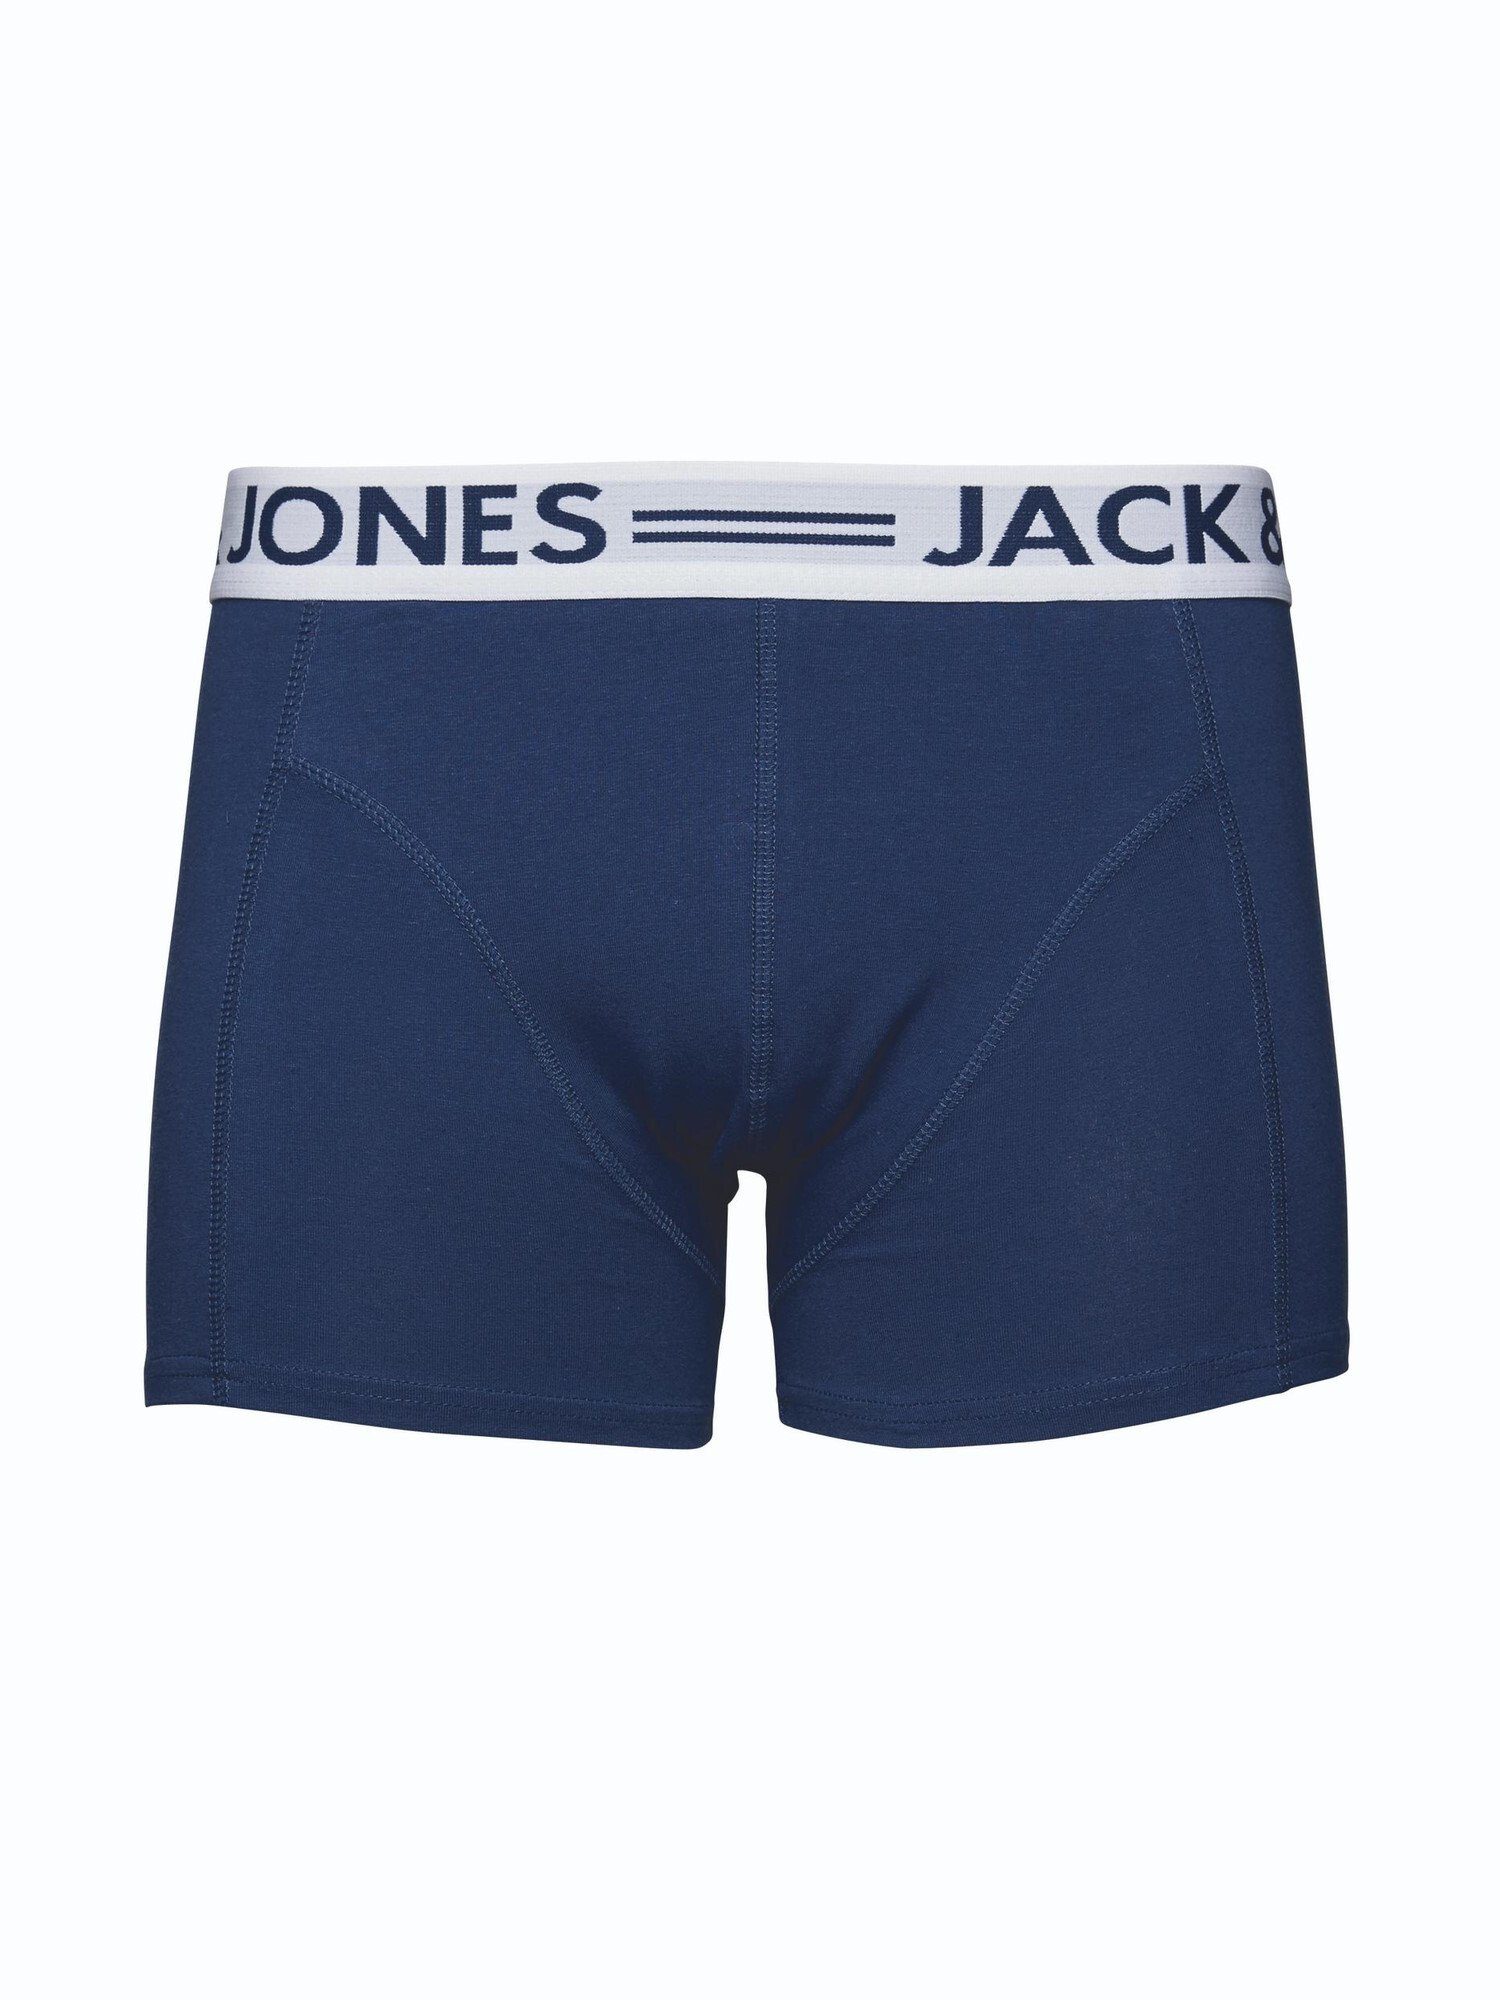 Sense blau & Boxershorts Unterhose Trunks Jack Jones